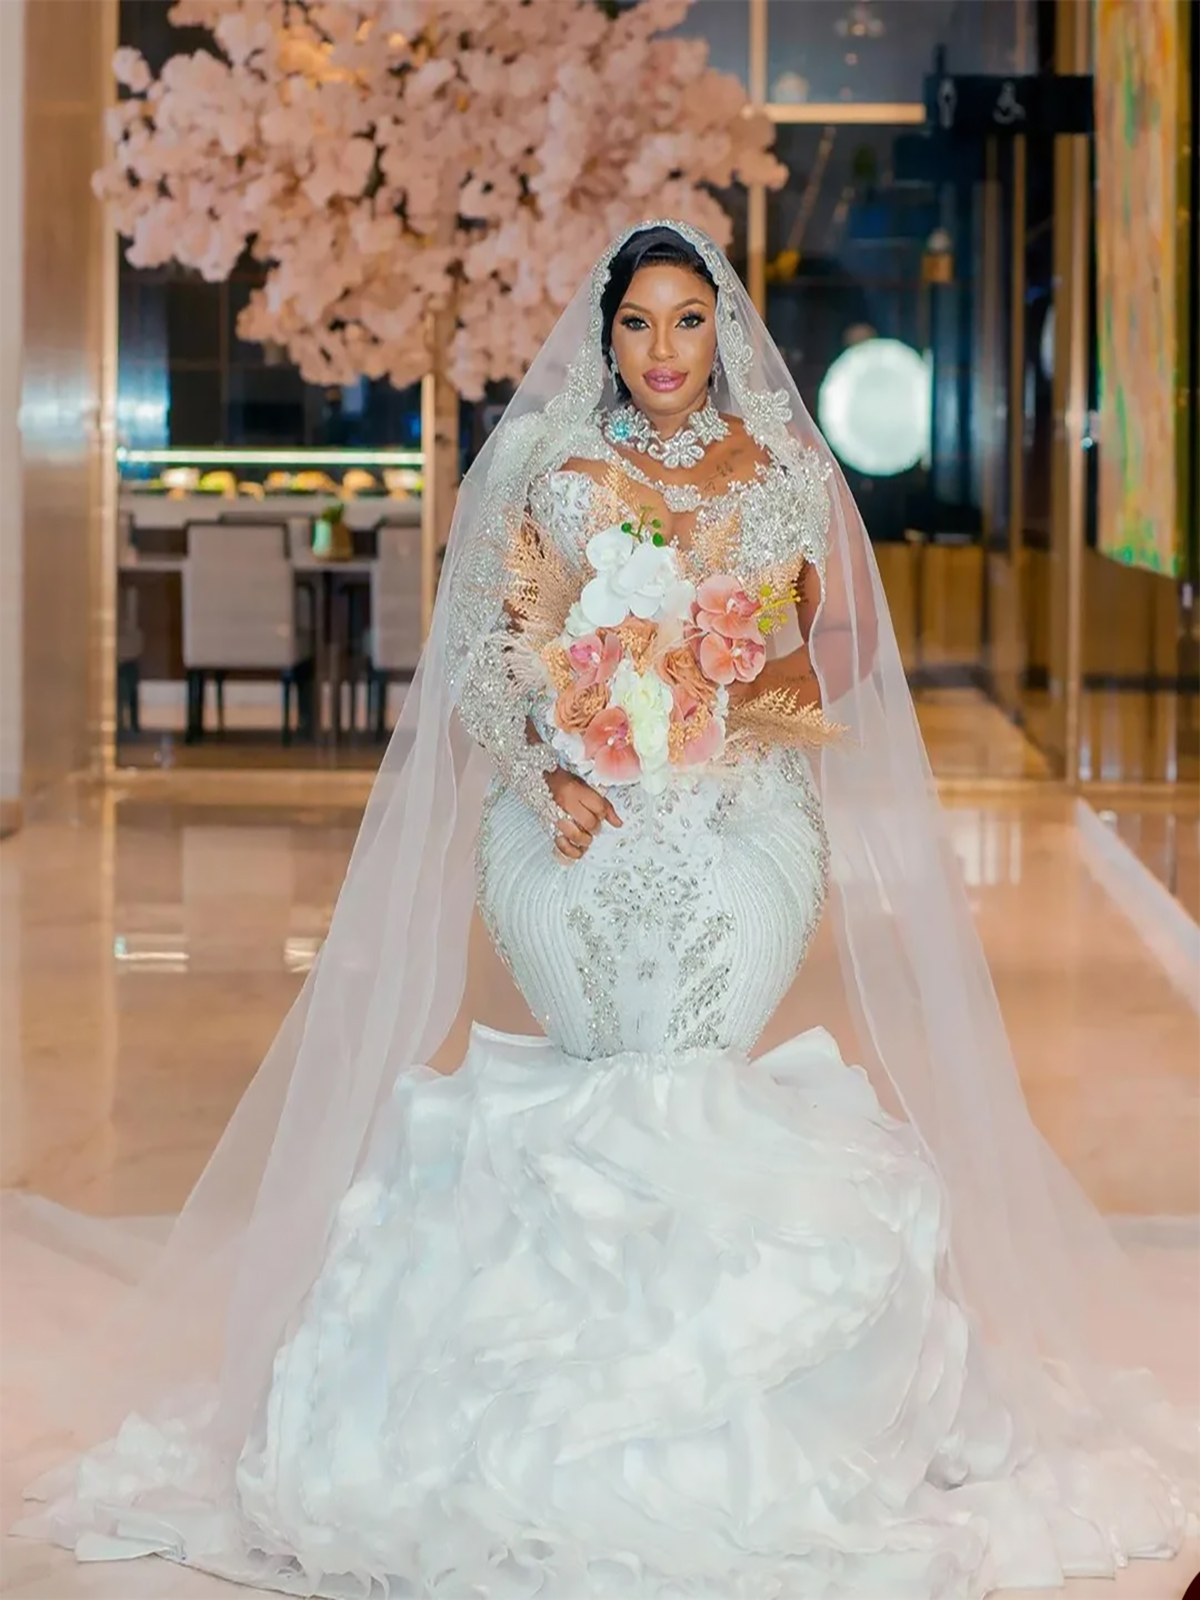 Luxury Beads Mermaid Wedding Dress Full Crystal Shiny Bridal Gown Romantic Long Sleeve Vestidos De Novia Custom Made